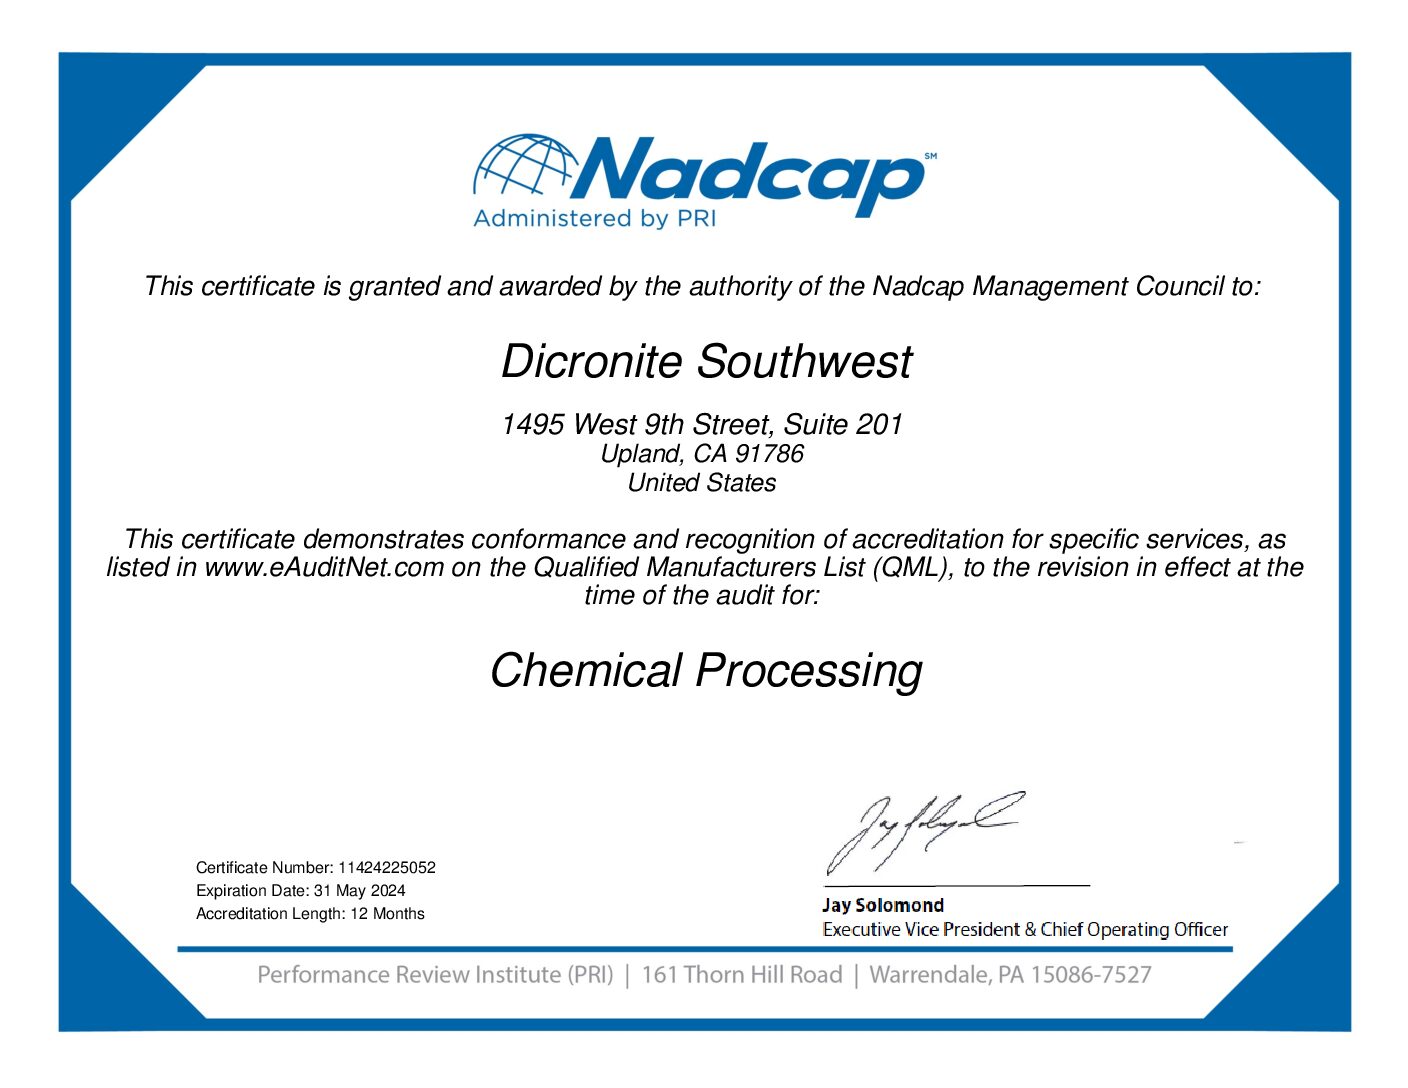 Dicronite Southwest Receives NADCAP Accreditation Thru May 2024